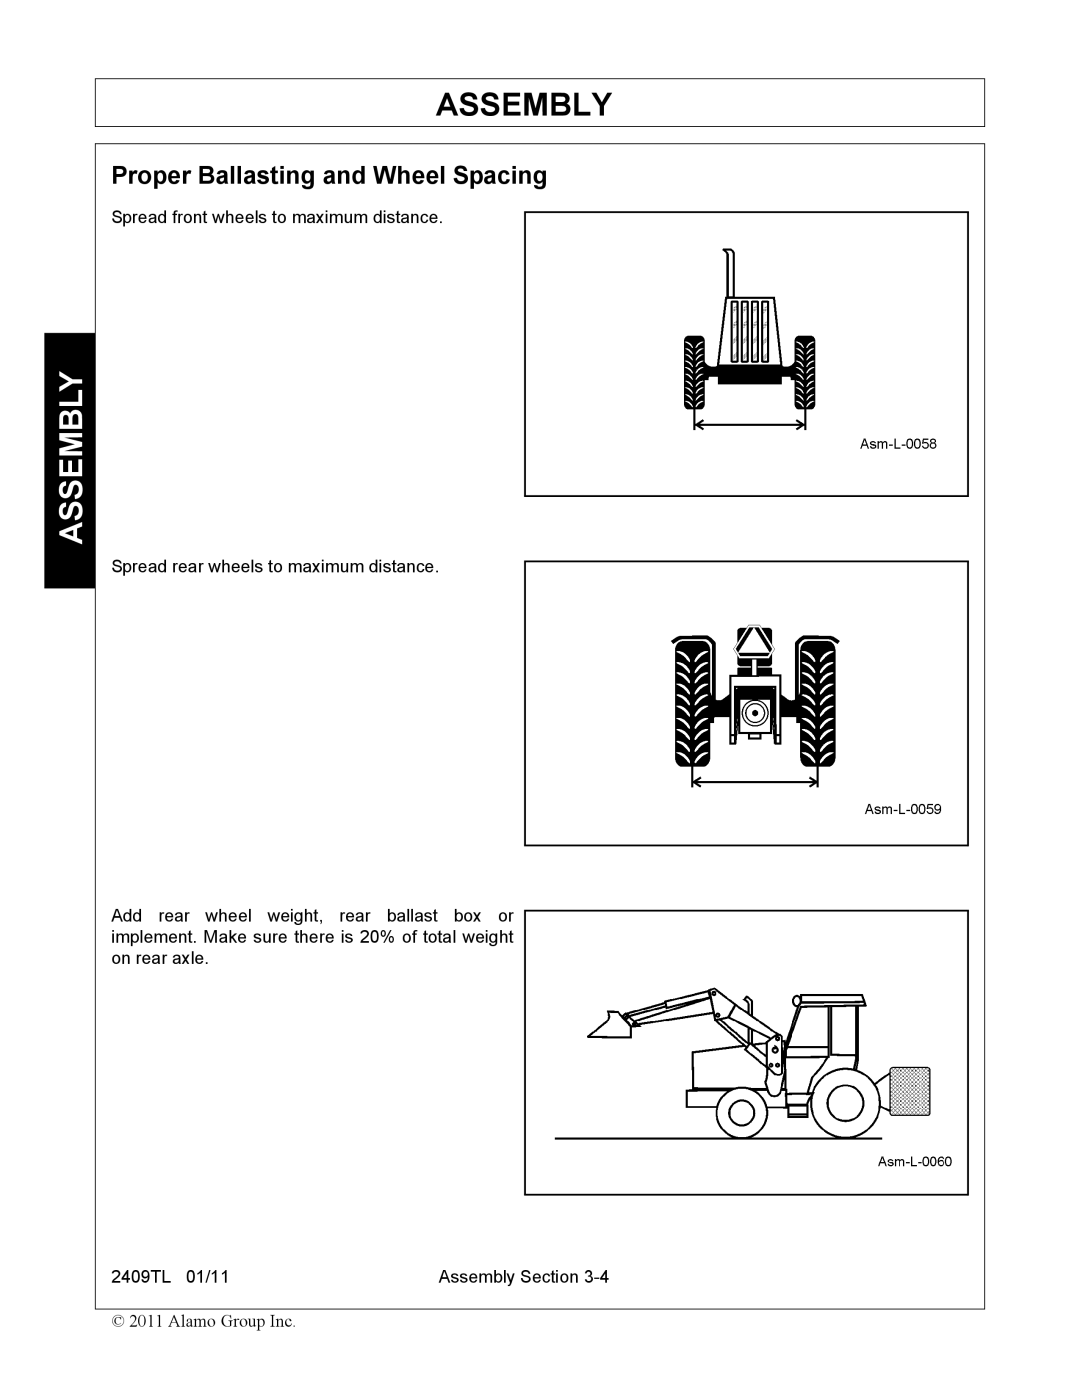 Servis-Rhino 2409TL manual Proper Ballasting and Wheel Spacing 